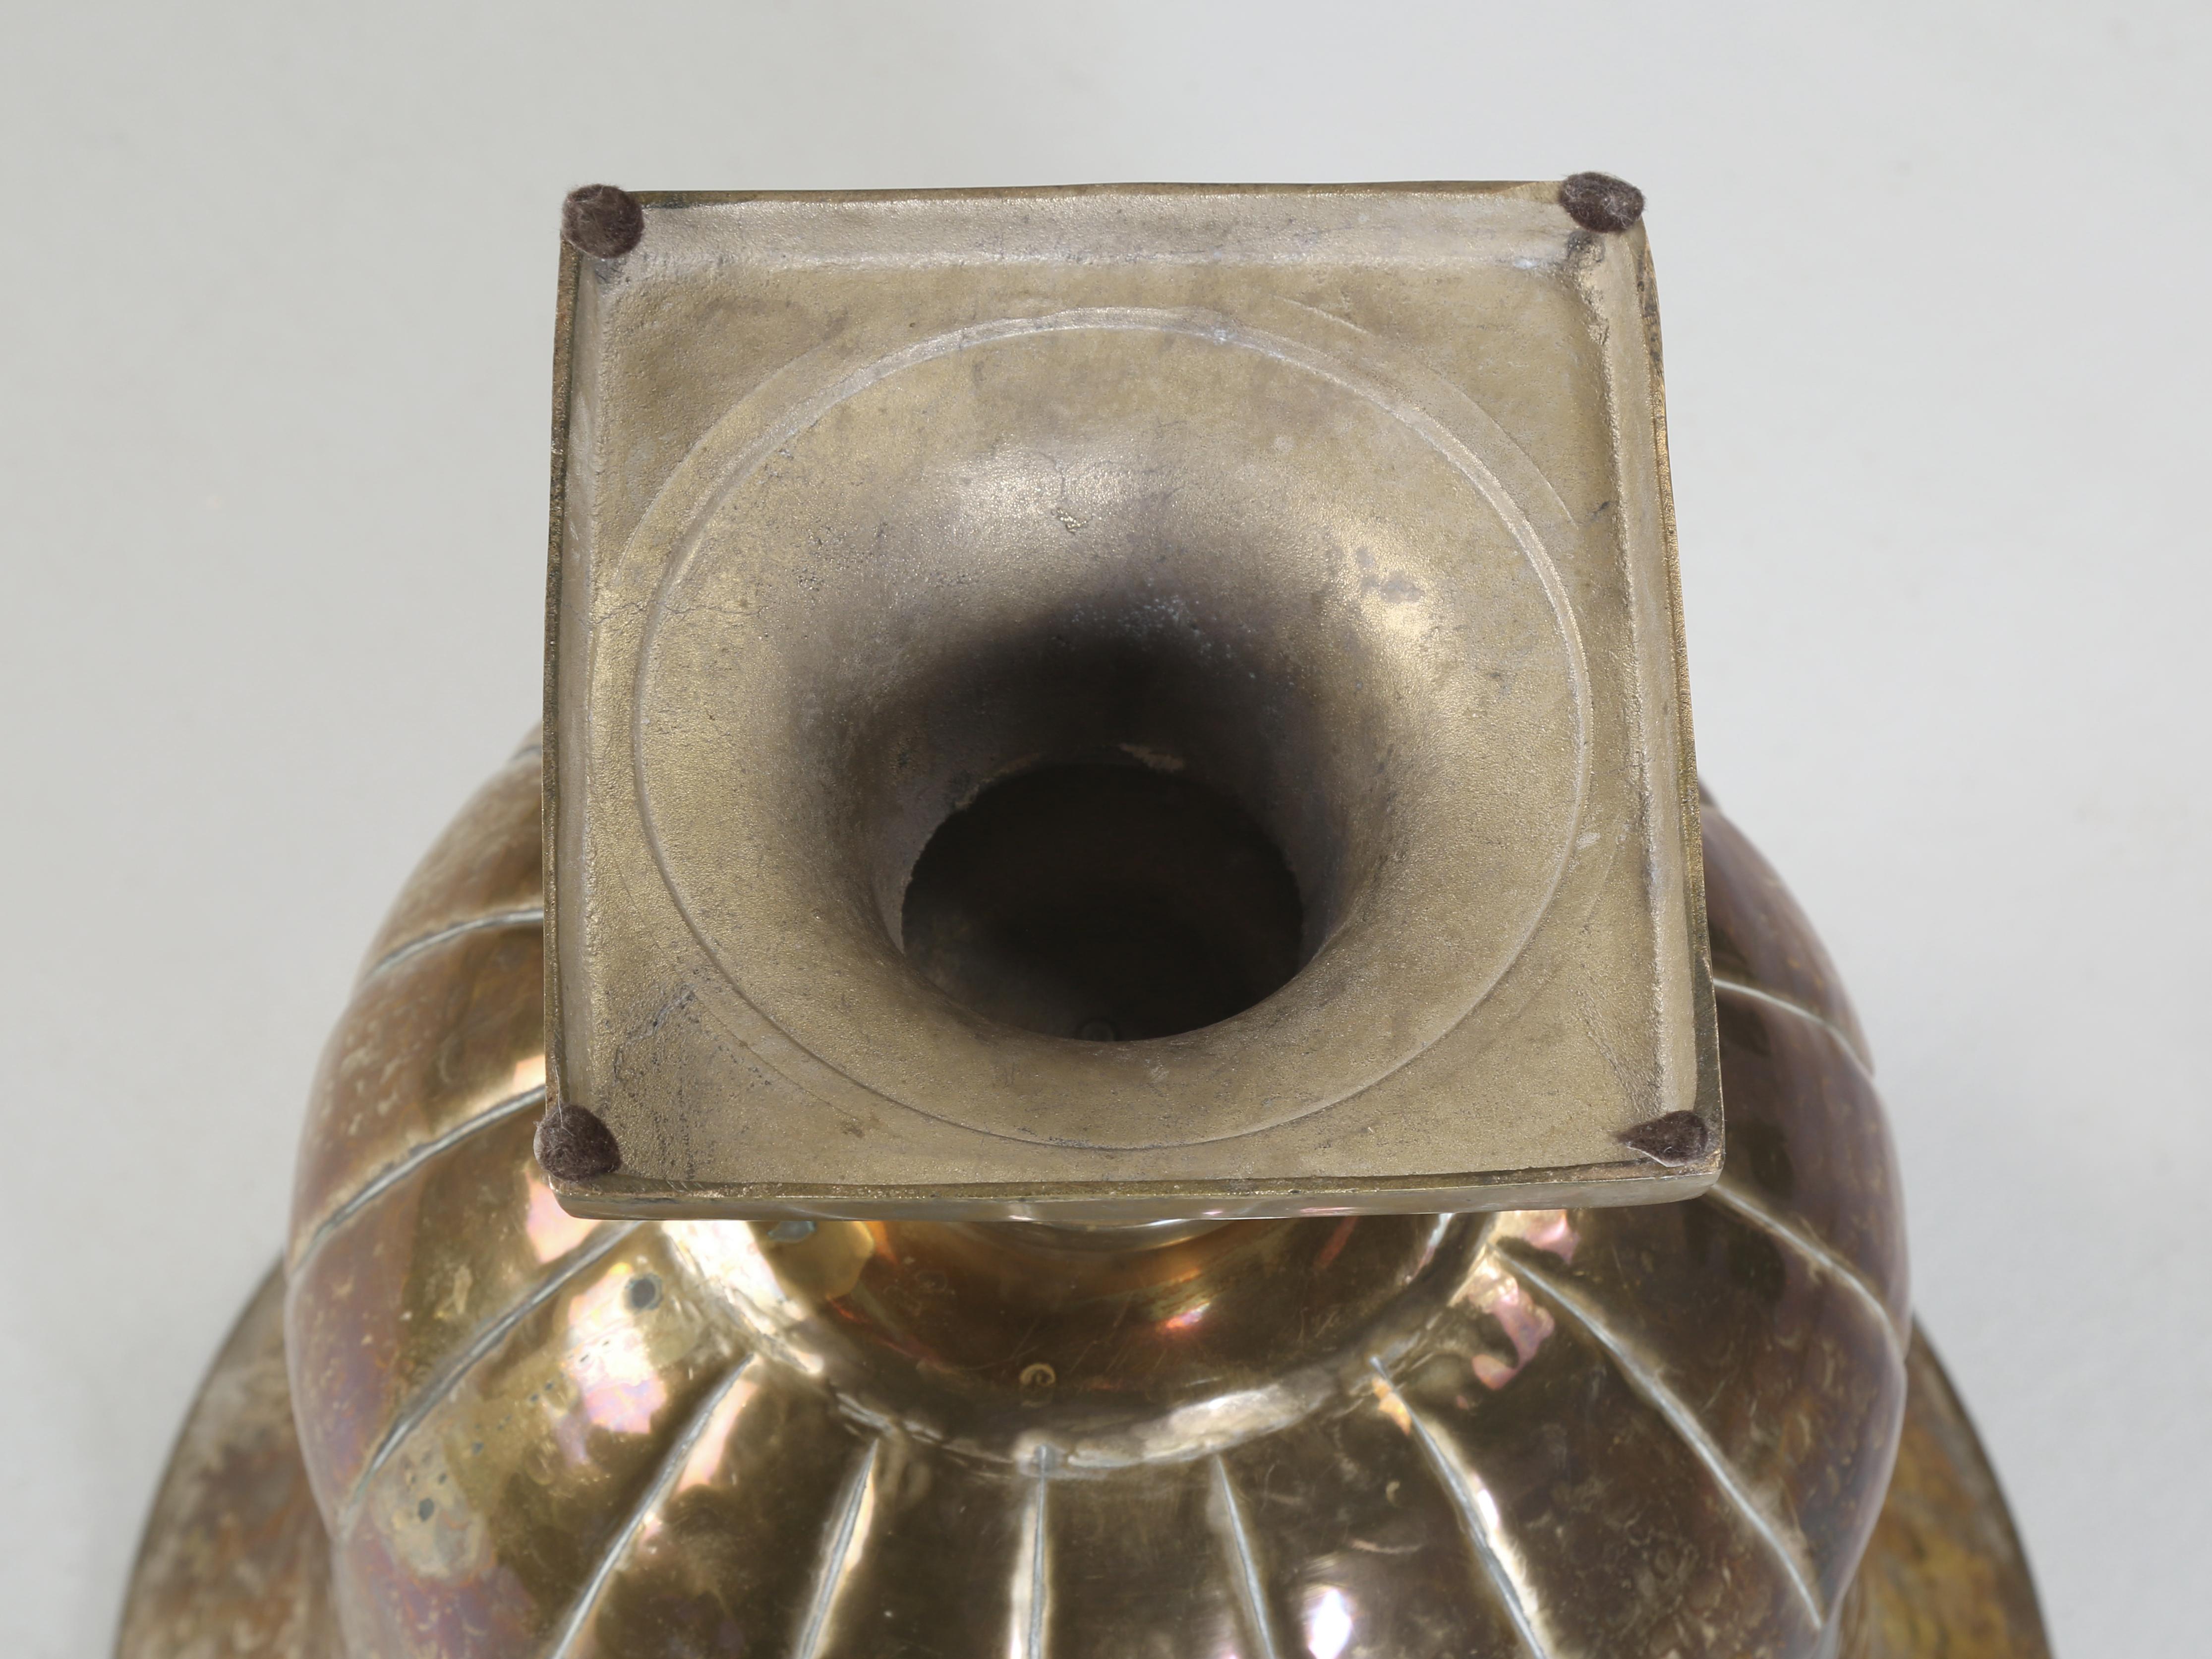 Huge Solid Brass Vase or Brass Urn Hand-Hammered Finish with Cast Brass Base  7